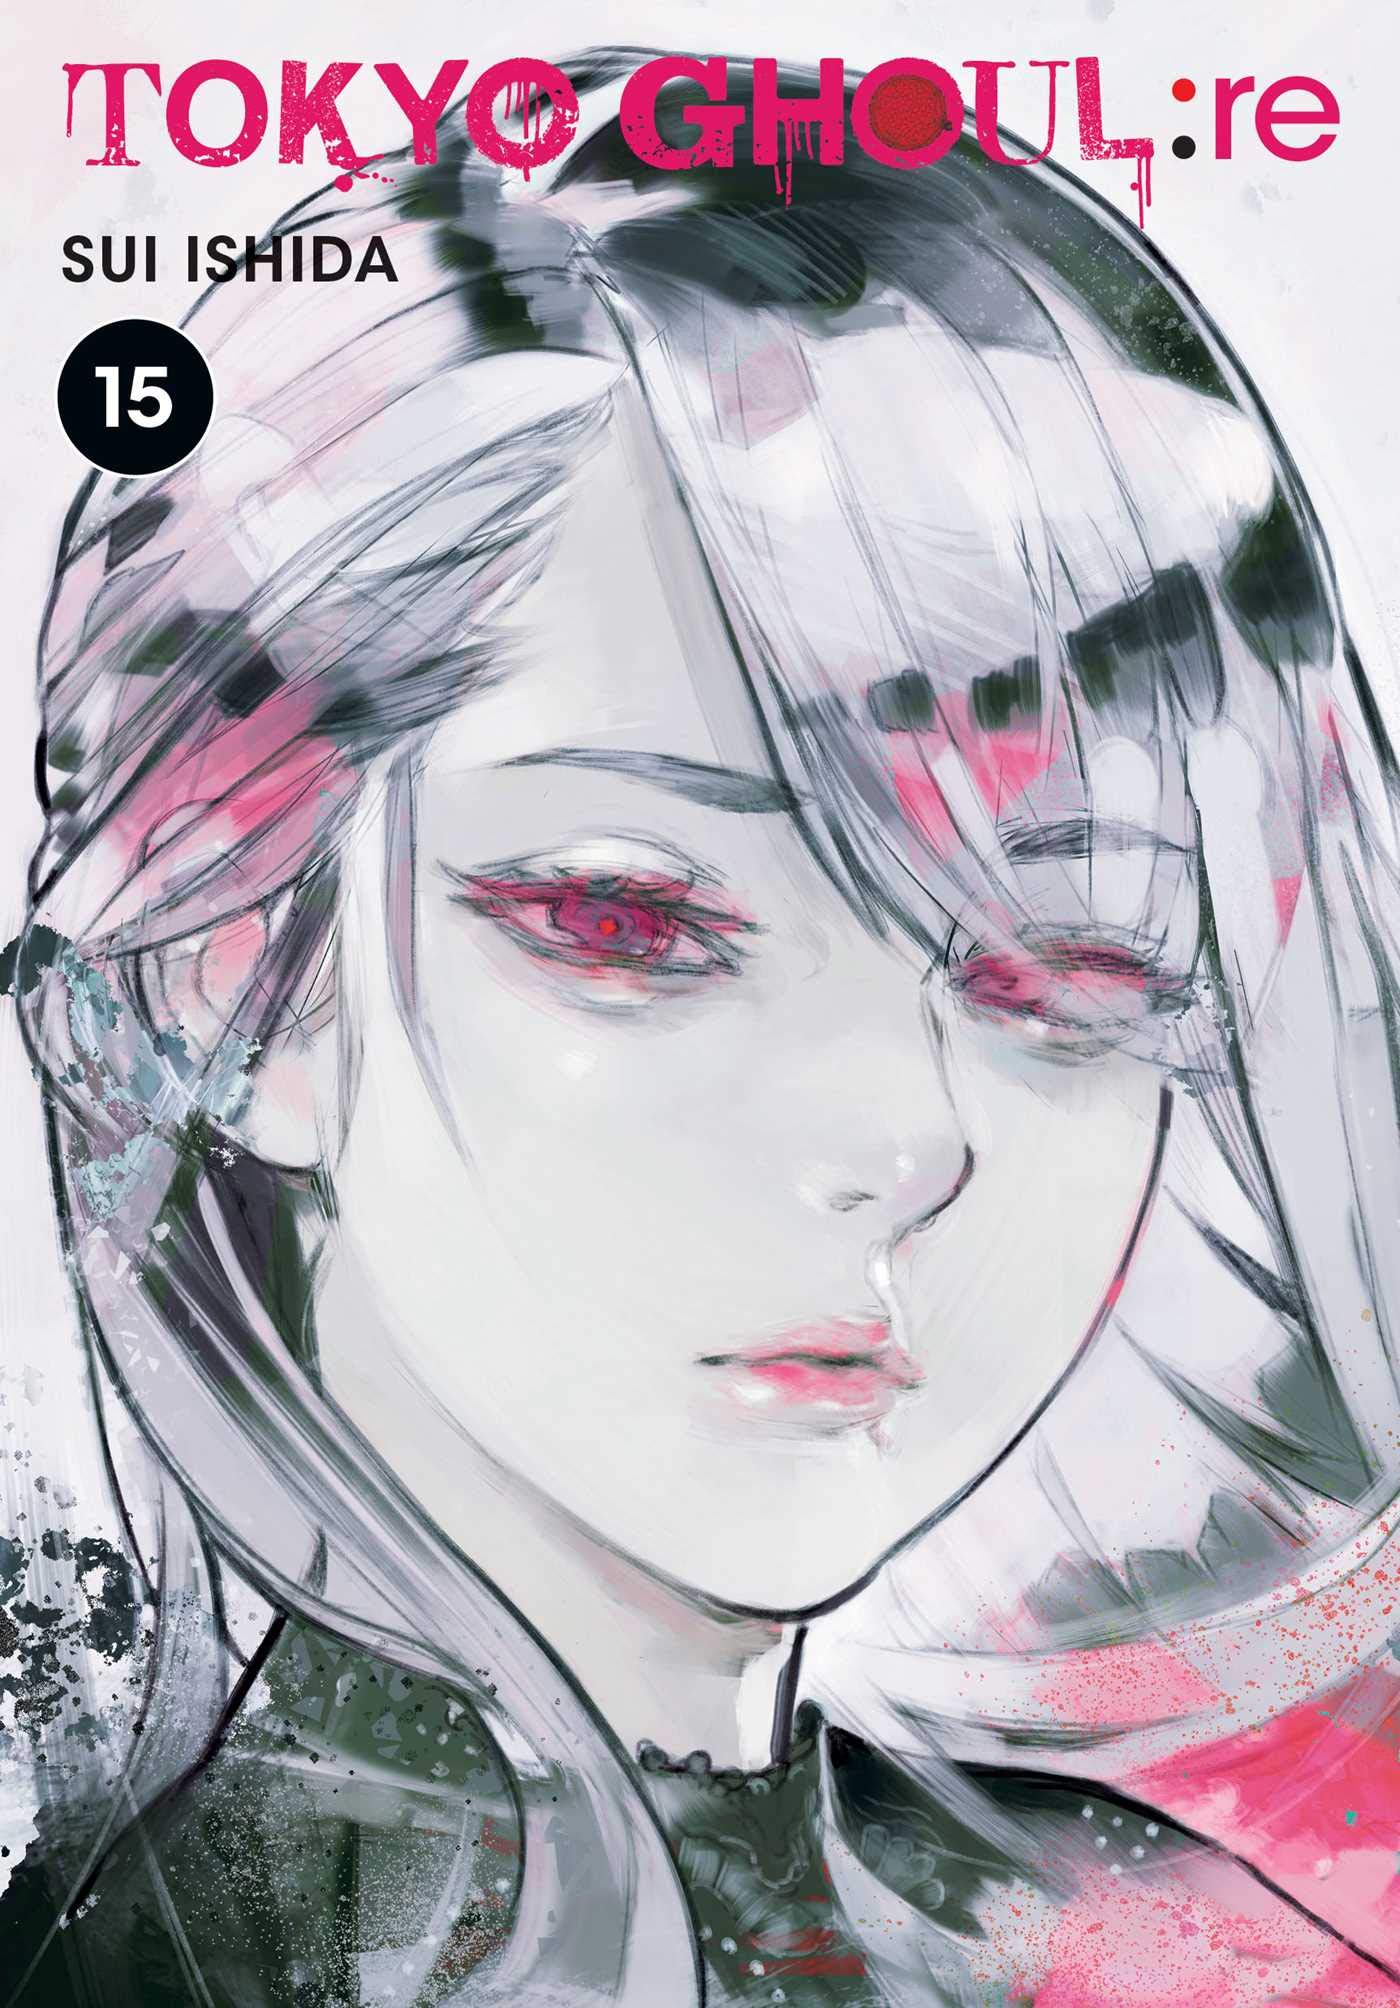 Tokyo Ghoul: re, Vol. 15 | Sui Ishida